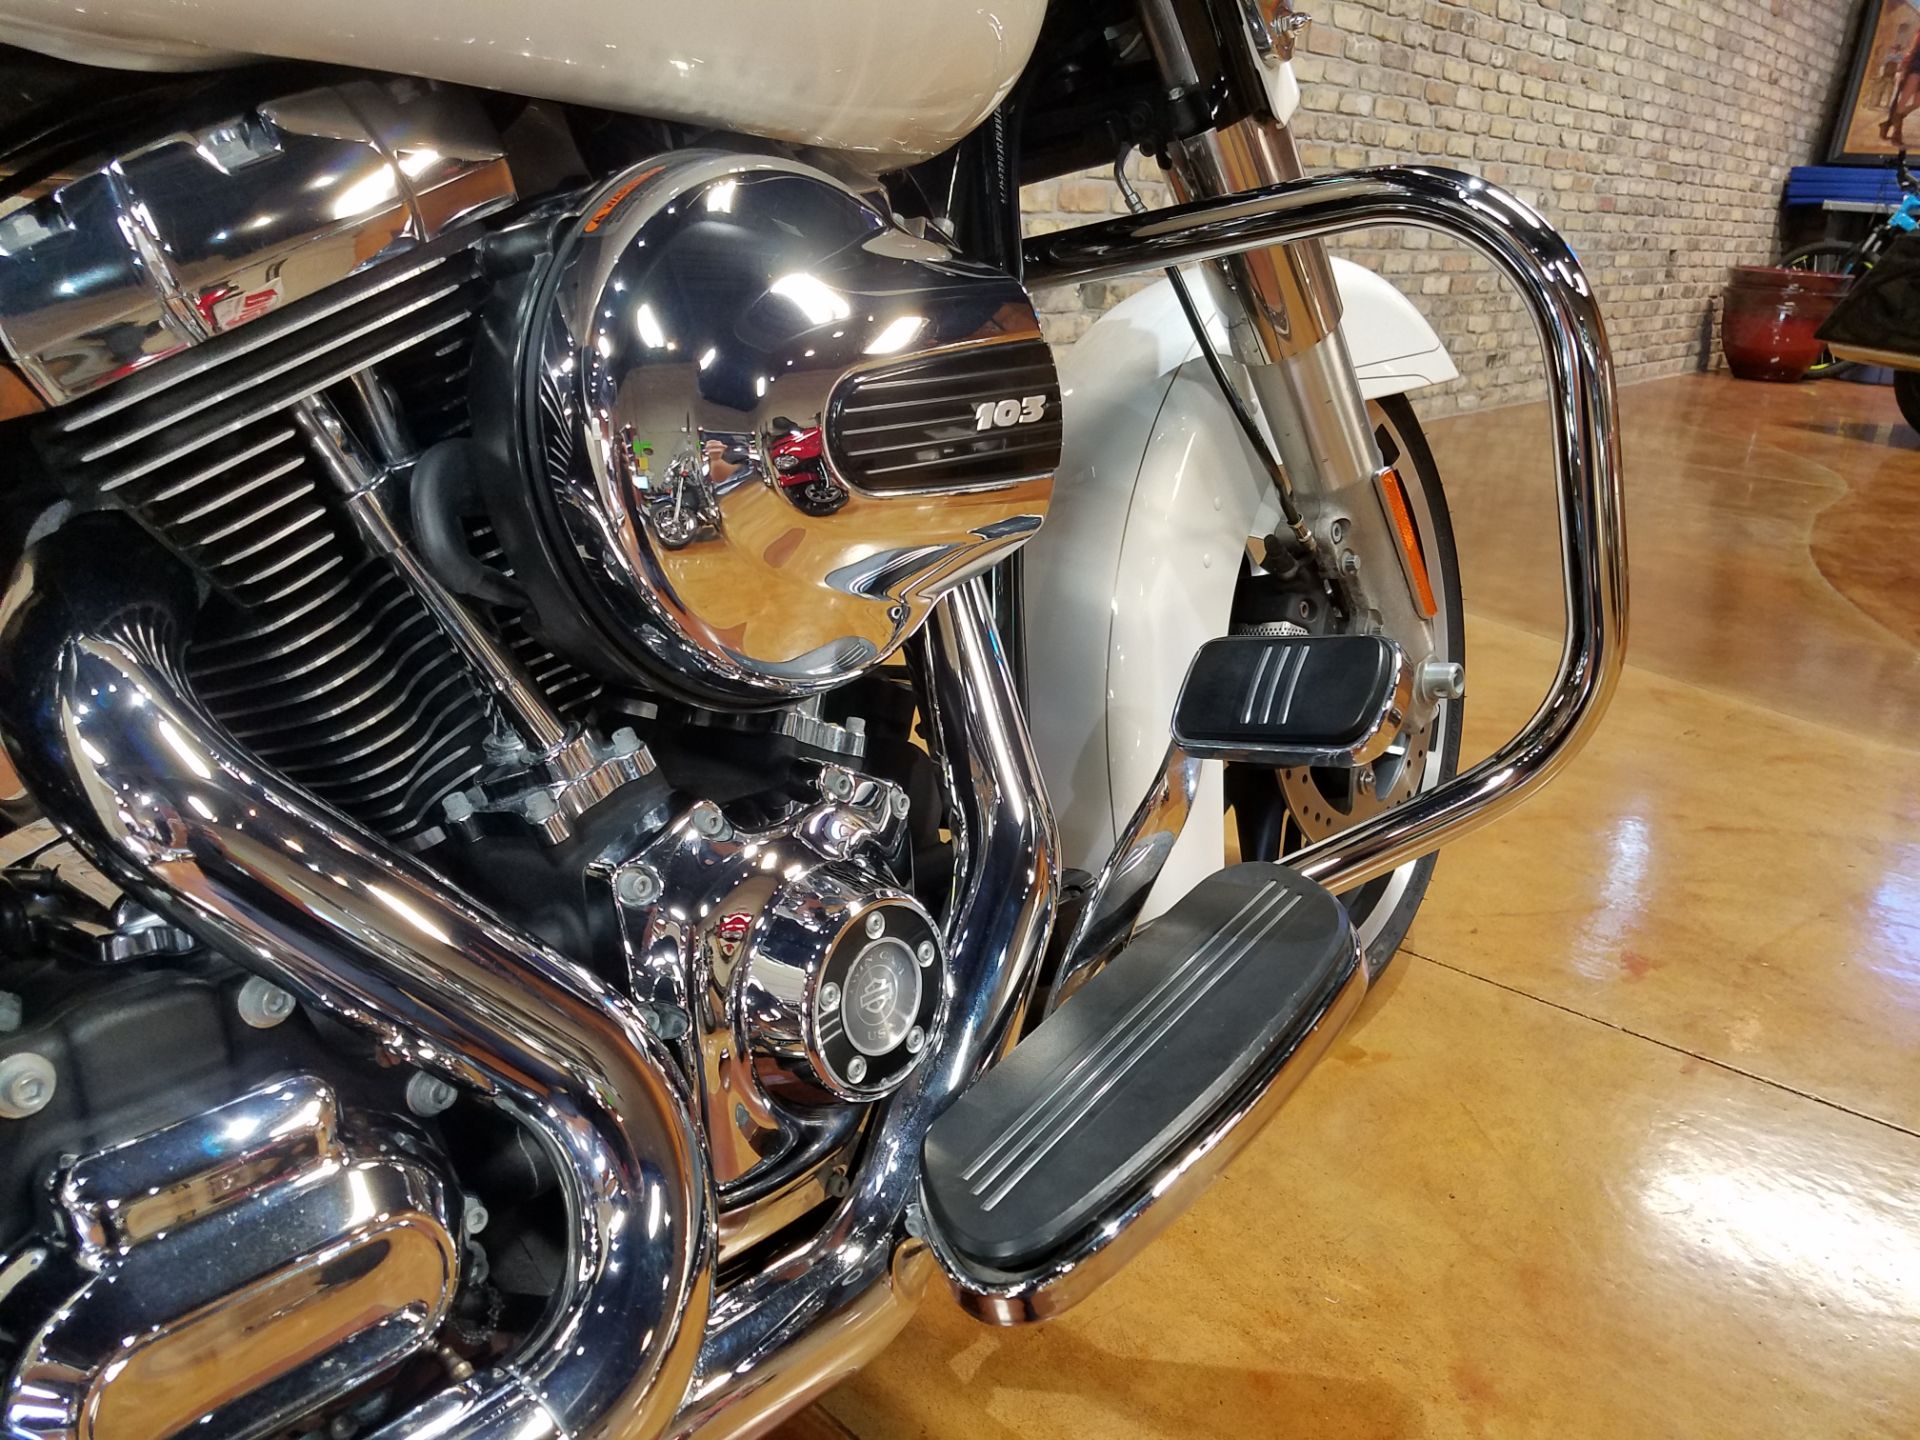 2015 Harley-Davidson Street Glide® Special in Big Bend, Wisconsin - Photo 12